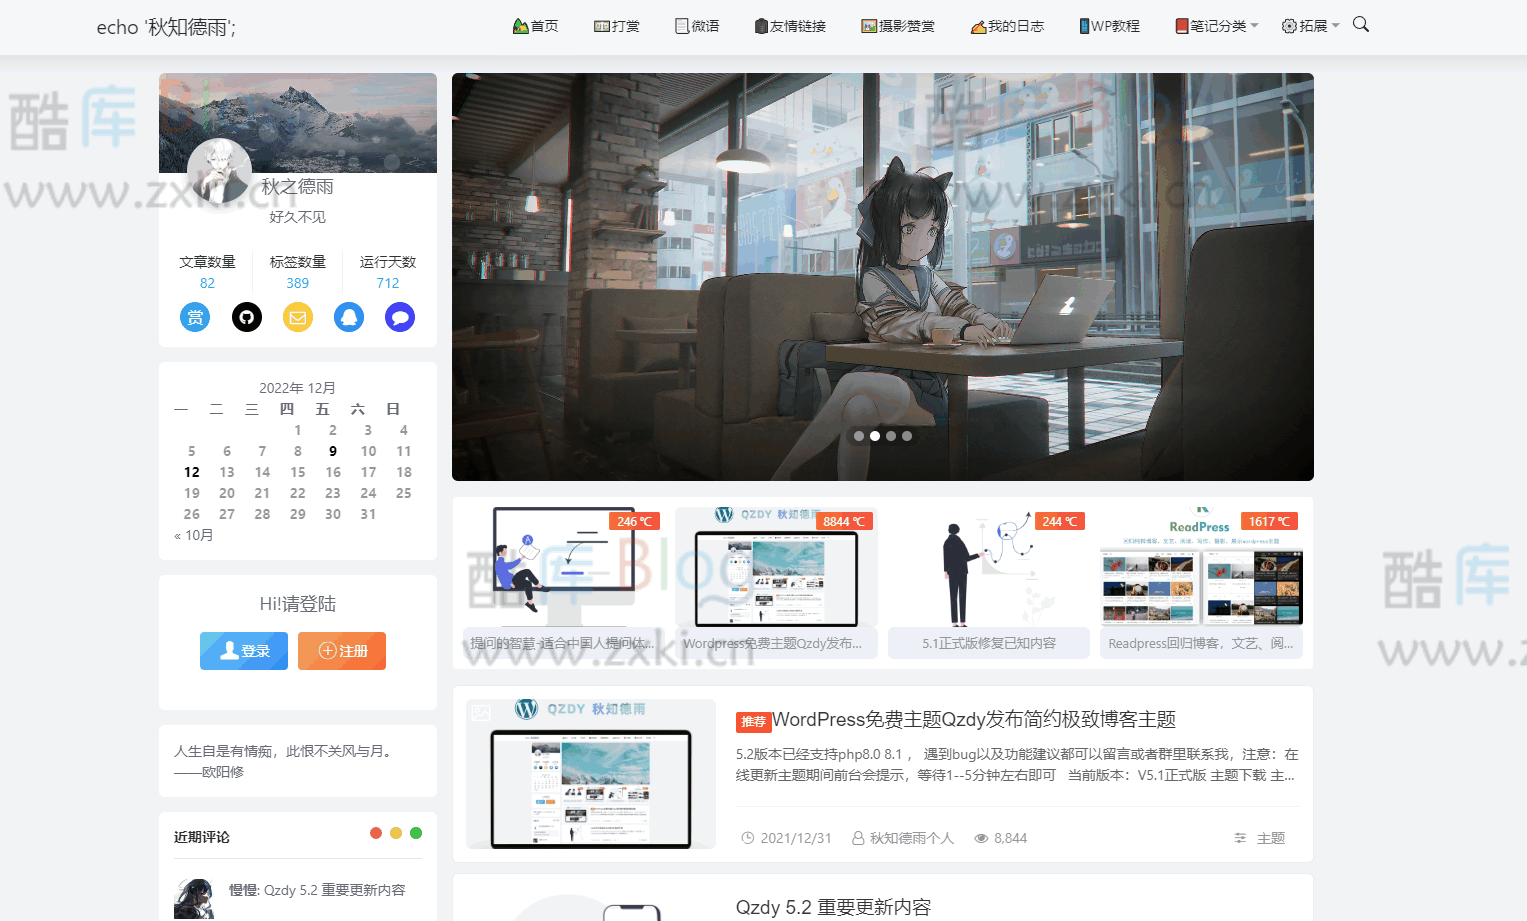 WordPress简约博客主题Qzdy(秋知德雨)更新发布5.1版本-源码福利社